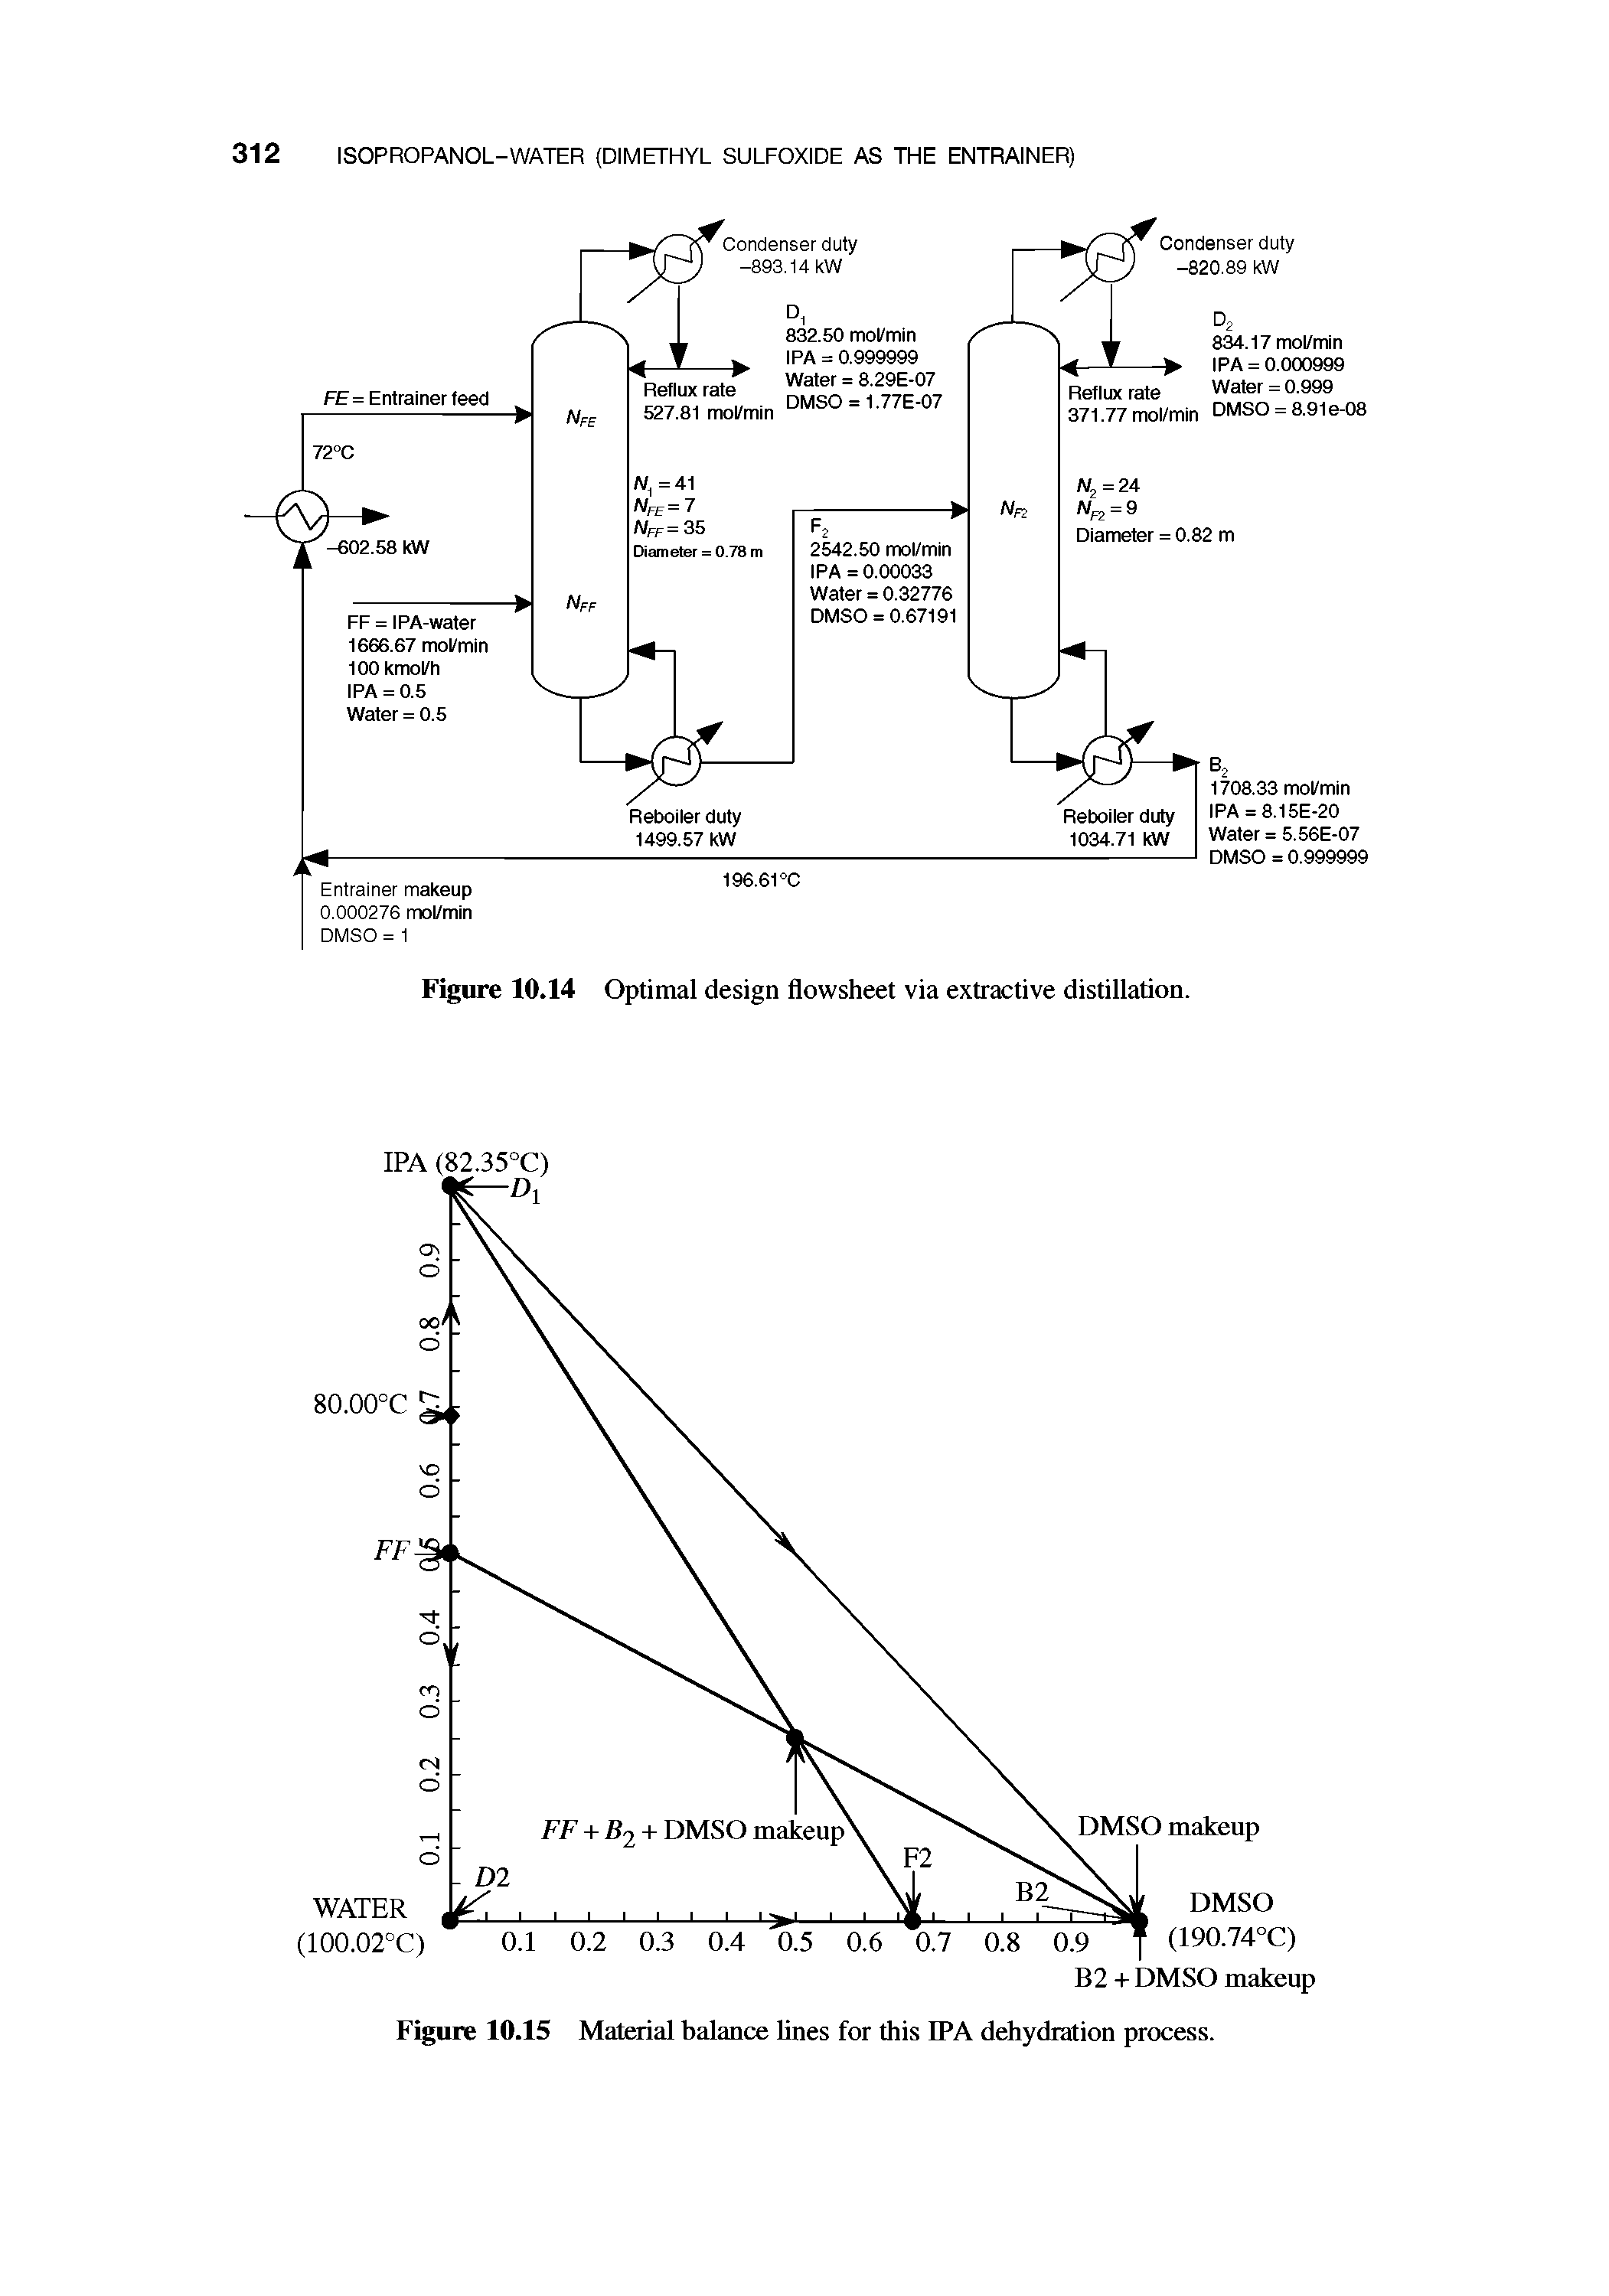 Figure 10.14 Optimal design flowsheet via extractive distillation.